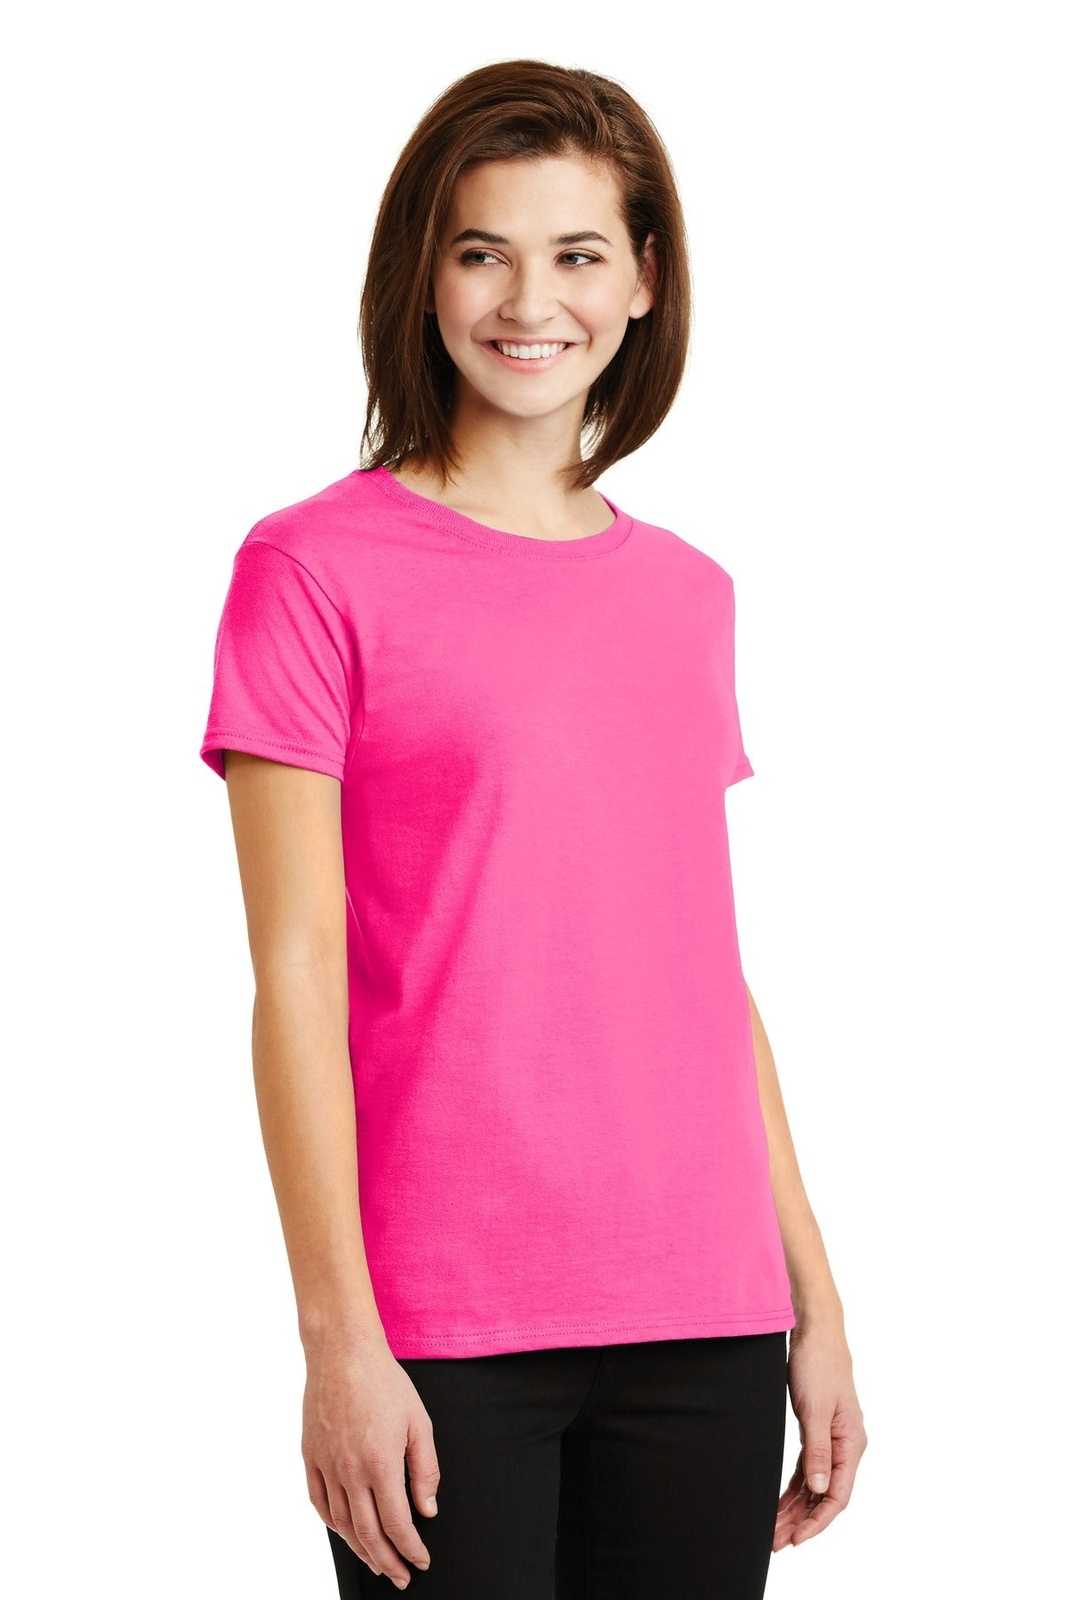 Gildan 2000L Ladies Ultra Cotton 100% Cotton T-Shirt - Safety Pink - HIT a Double